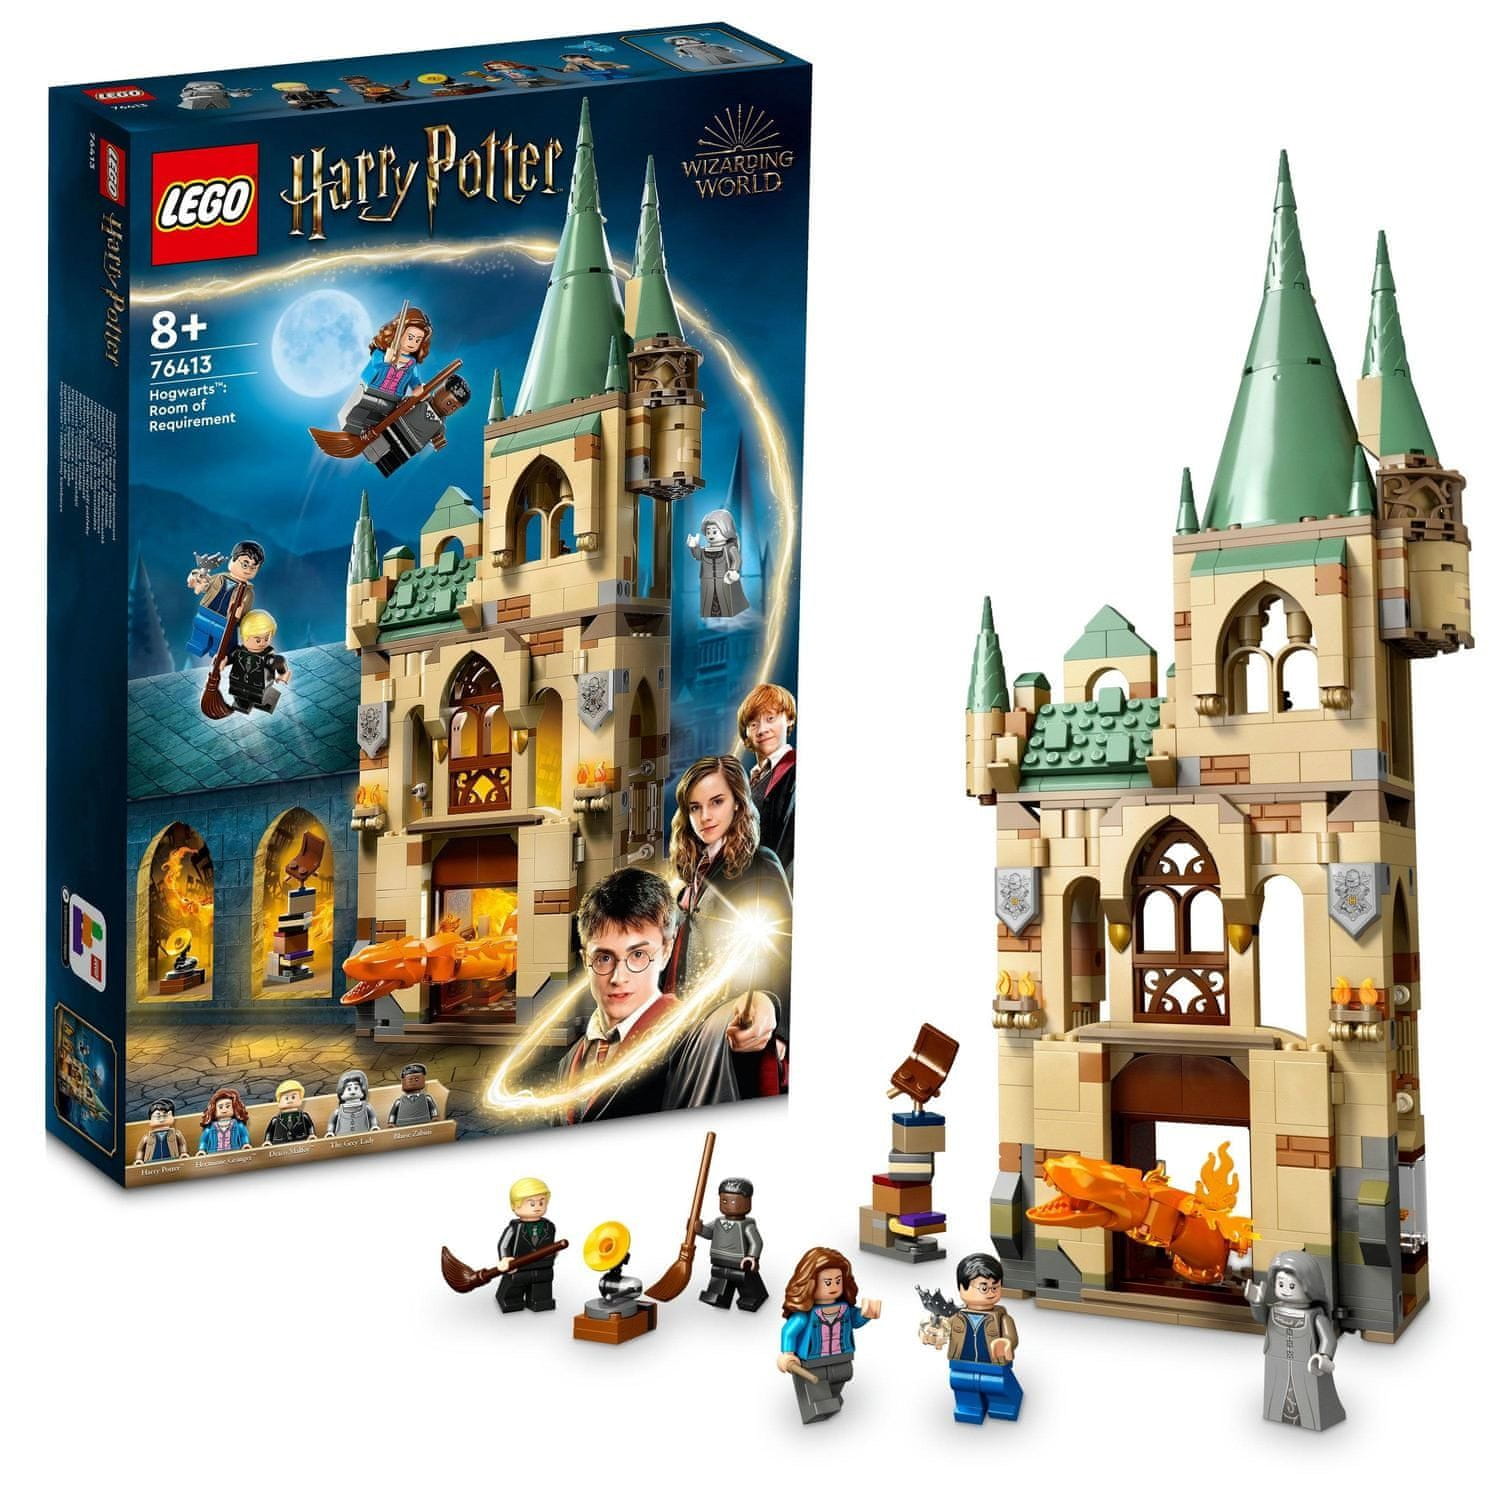 Hogwarts™ Astronomy Tower 75969, Harry Potter™